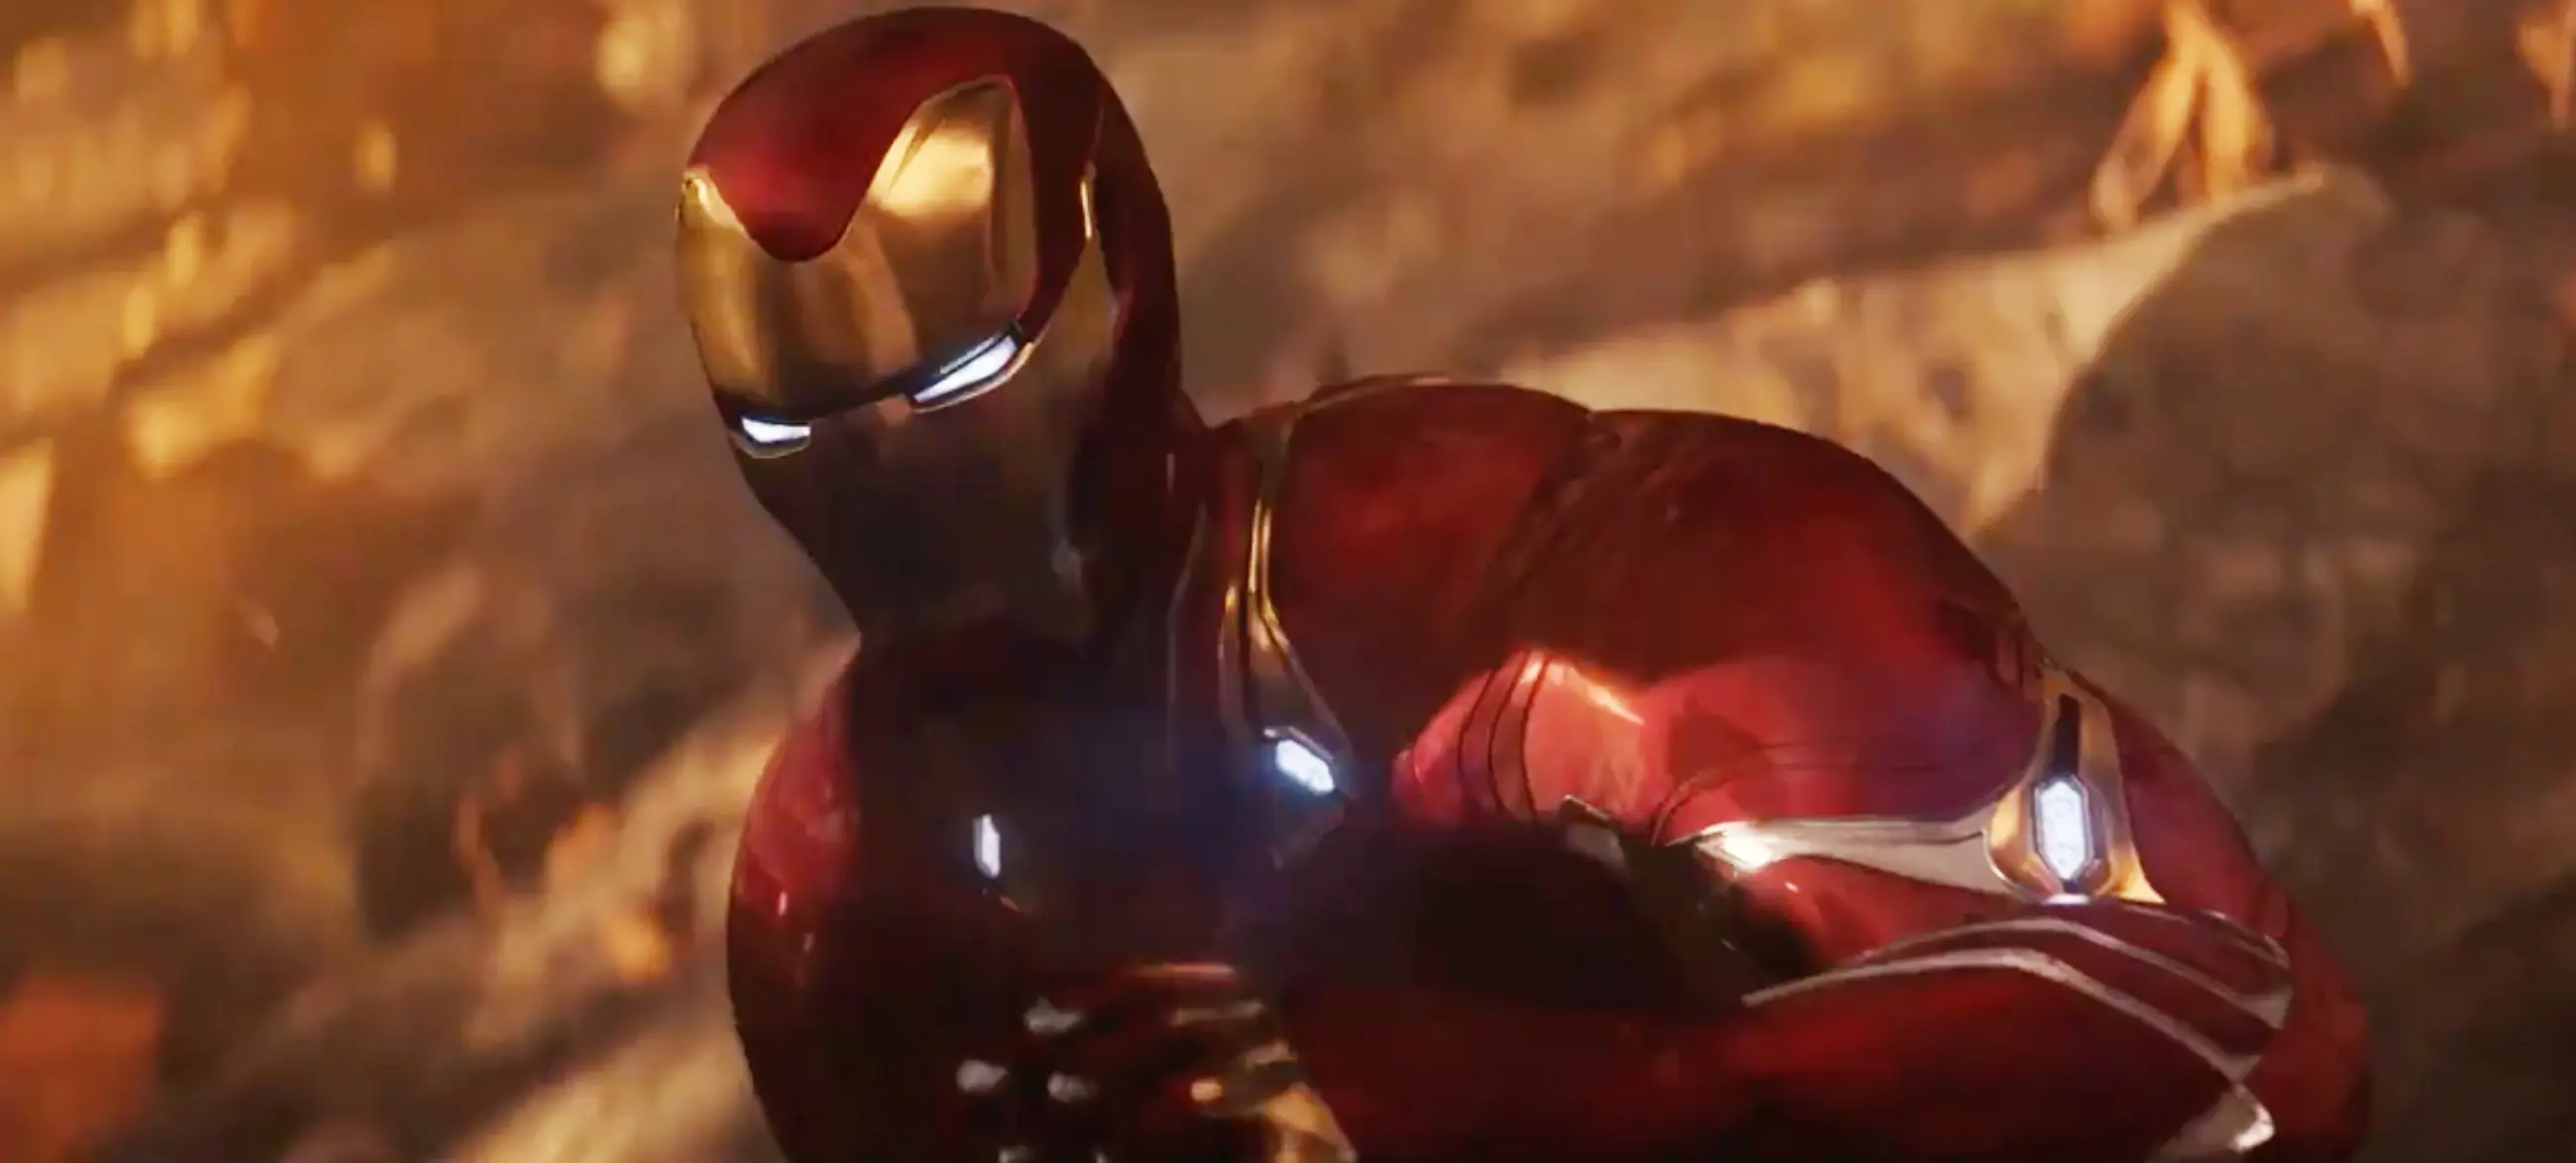 Iron Man di Avengers: Infinity War. (Inverse)